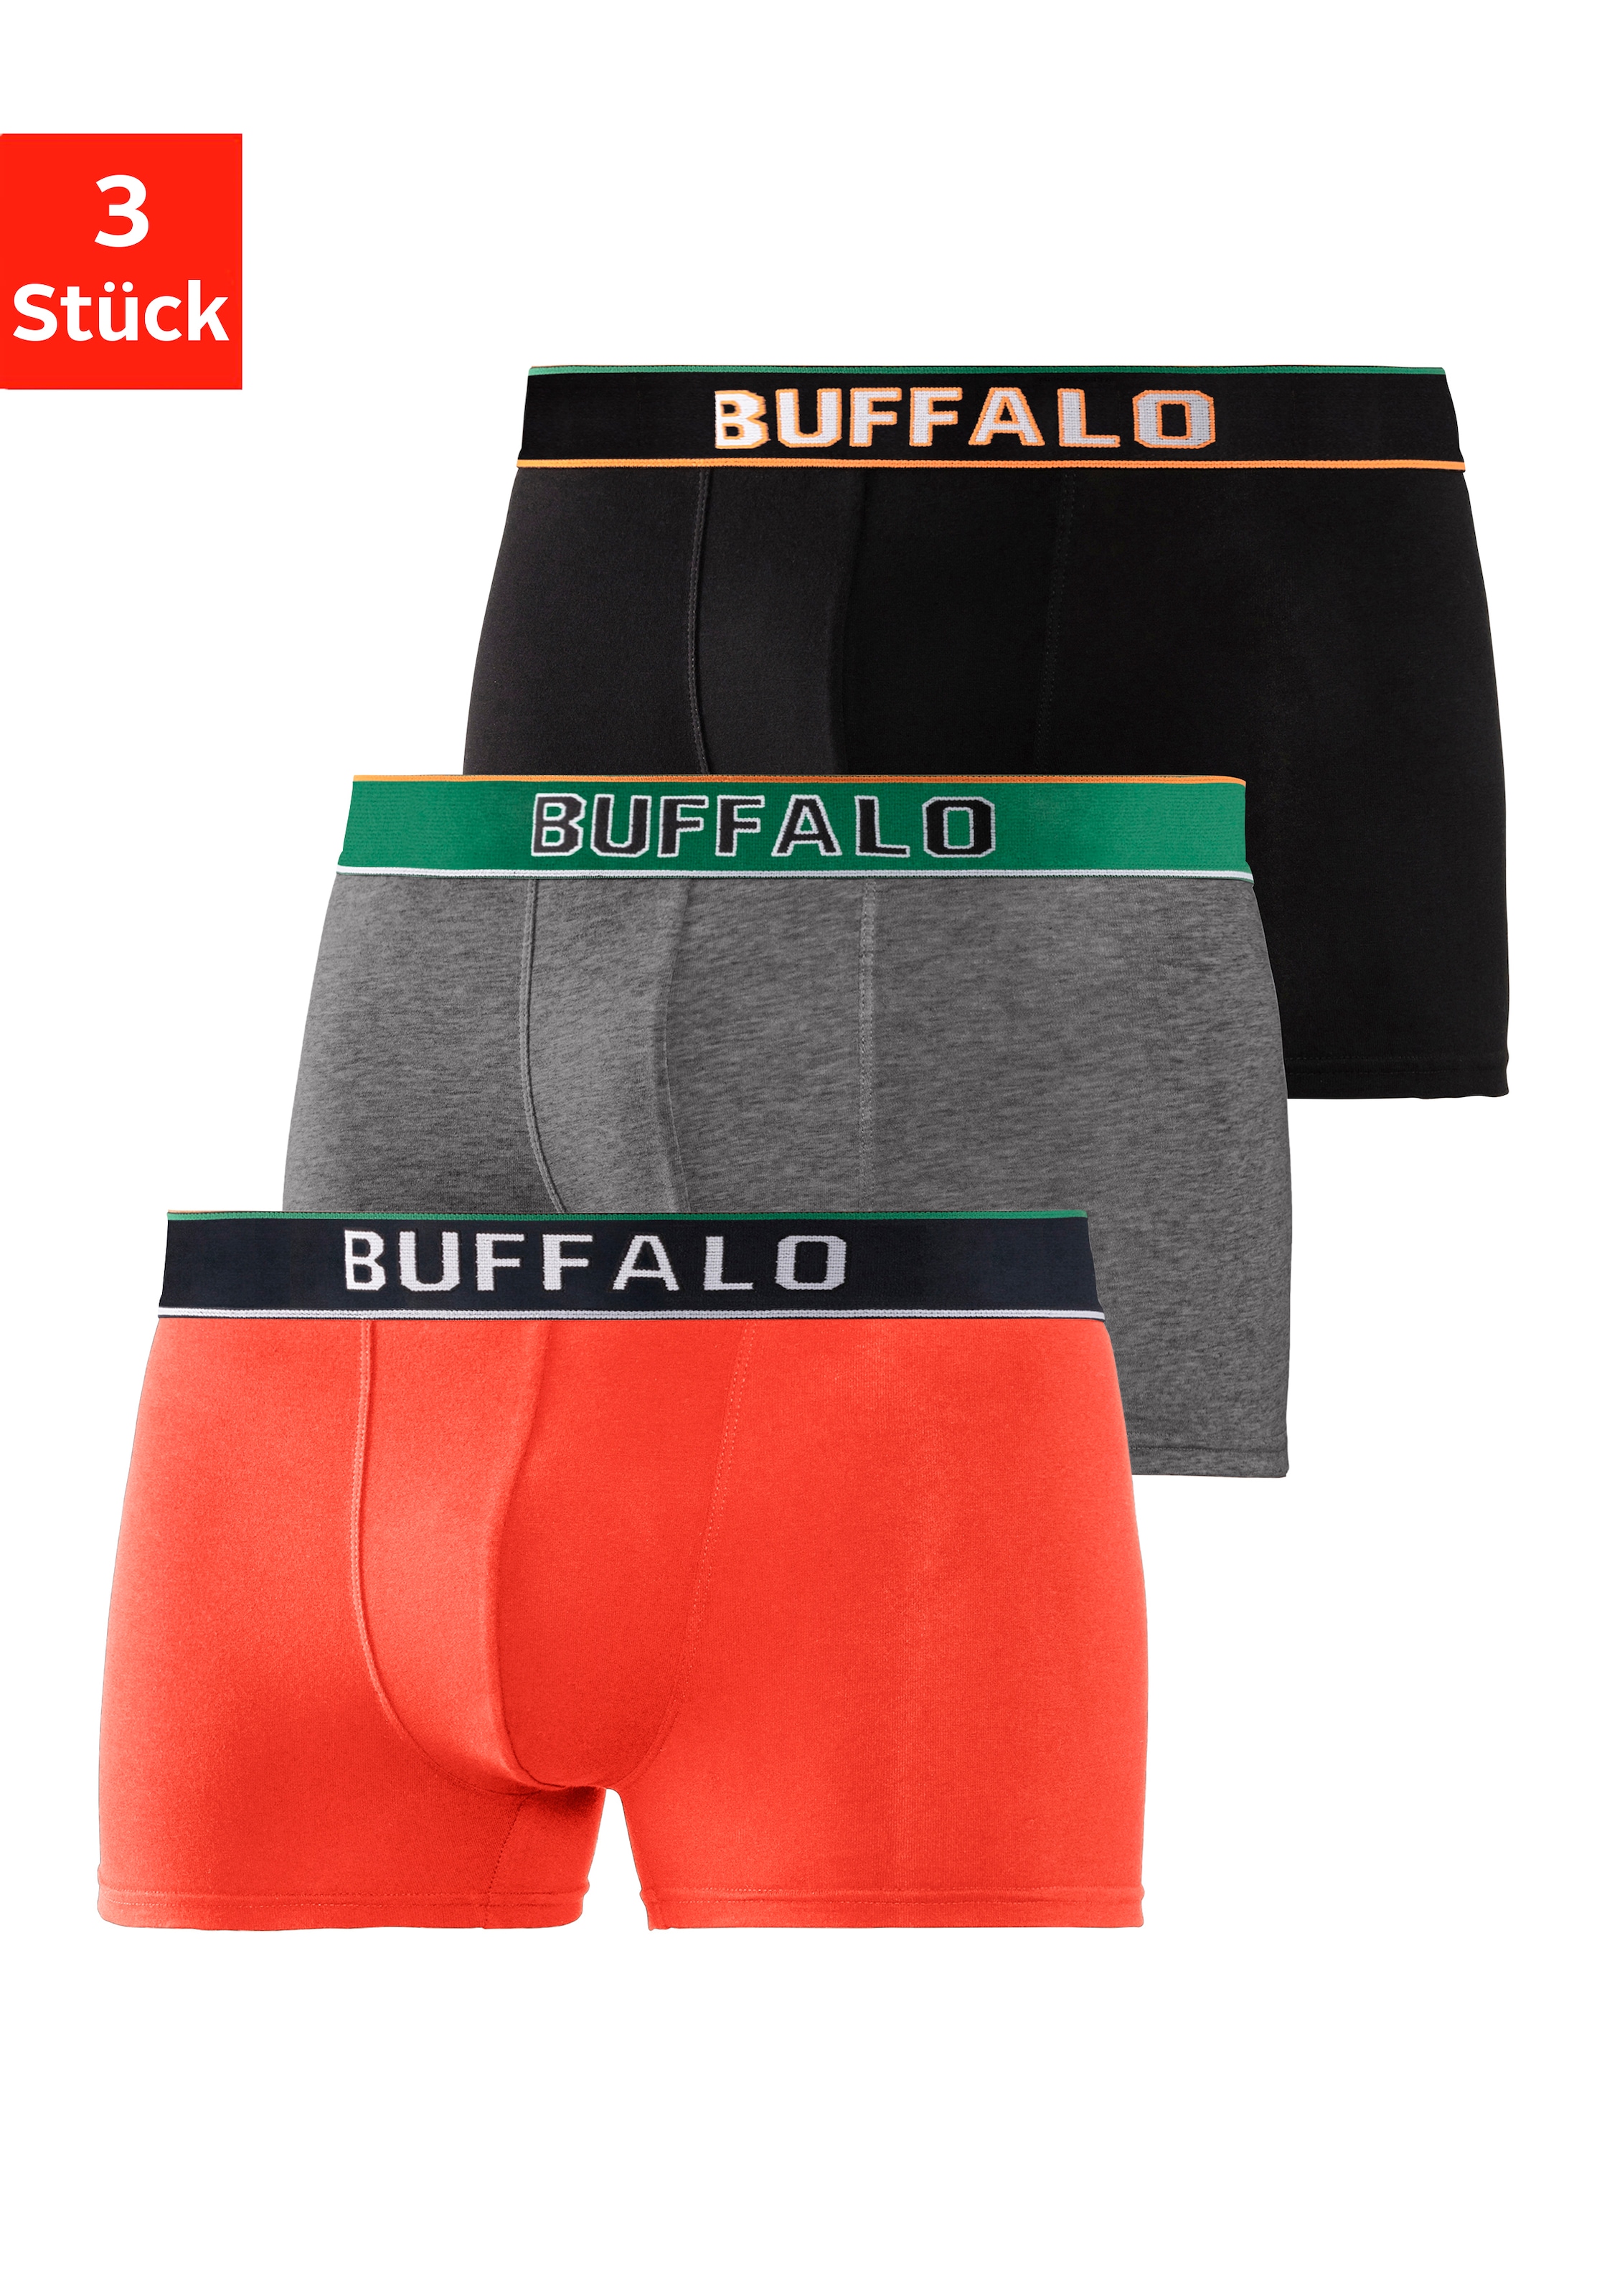 Buffalo Boxer, bei (Packung, Universal. at im College 3 Design ♕ St.), Webbund